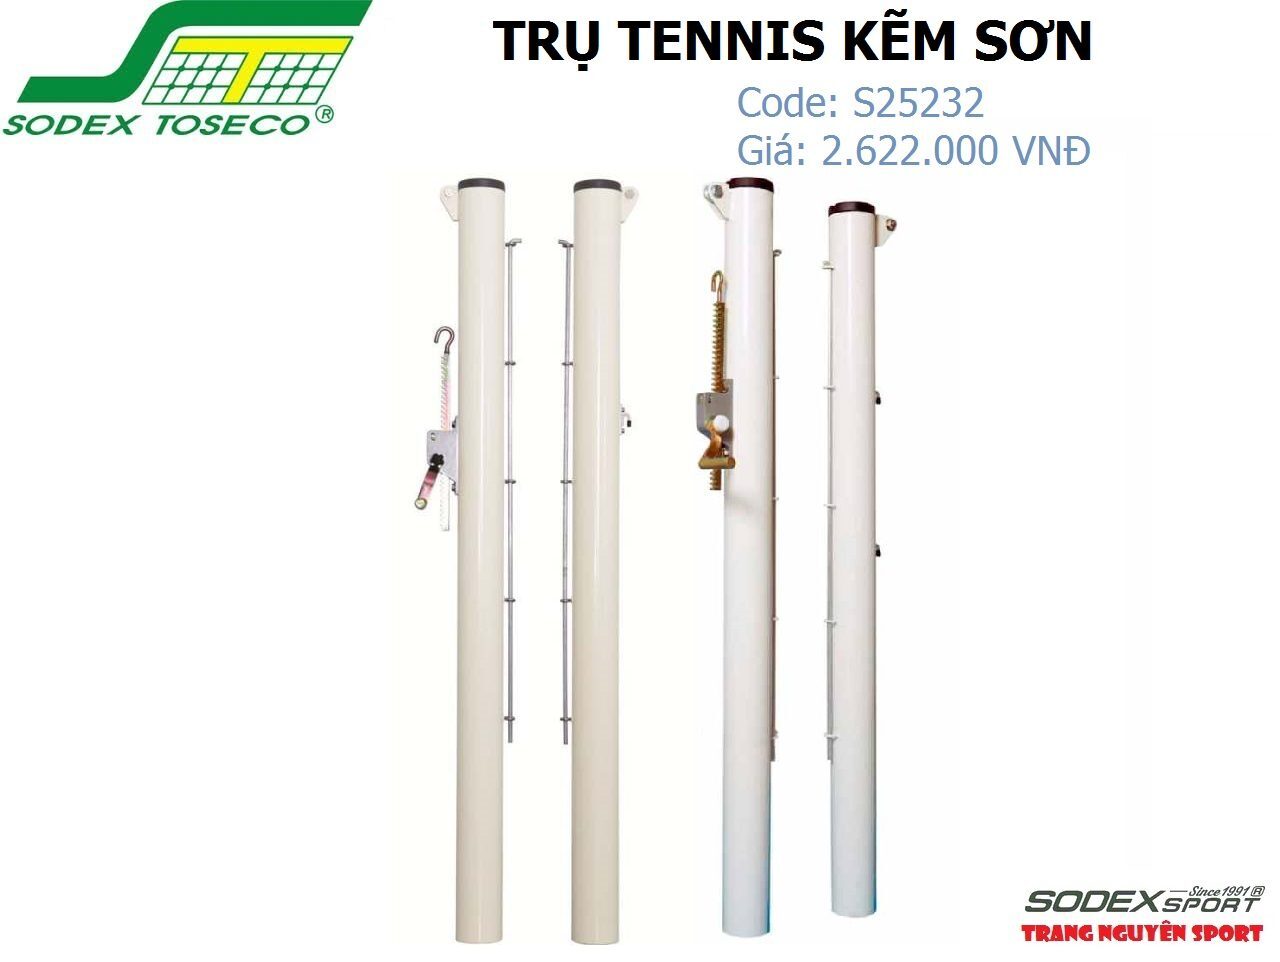 Trụ tennis thi đấu Sodex Toseco S25232